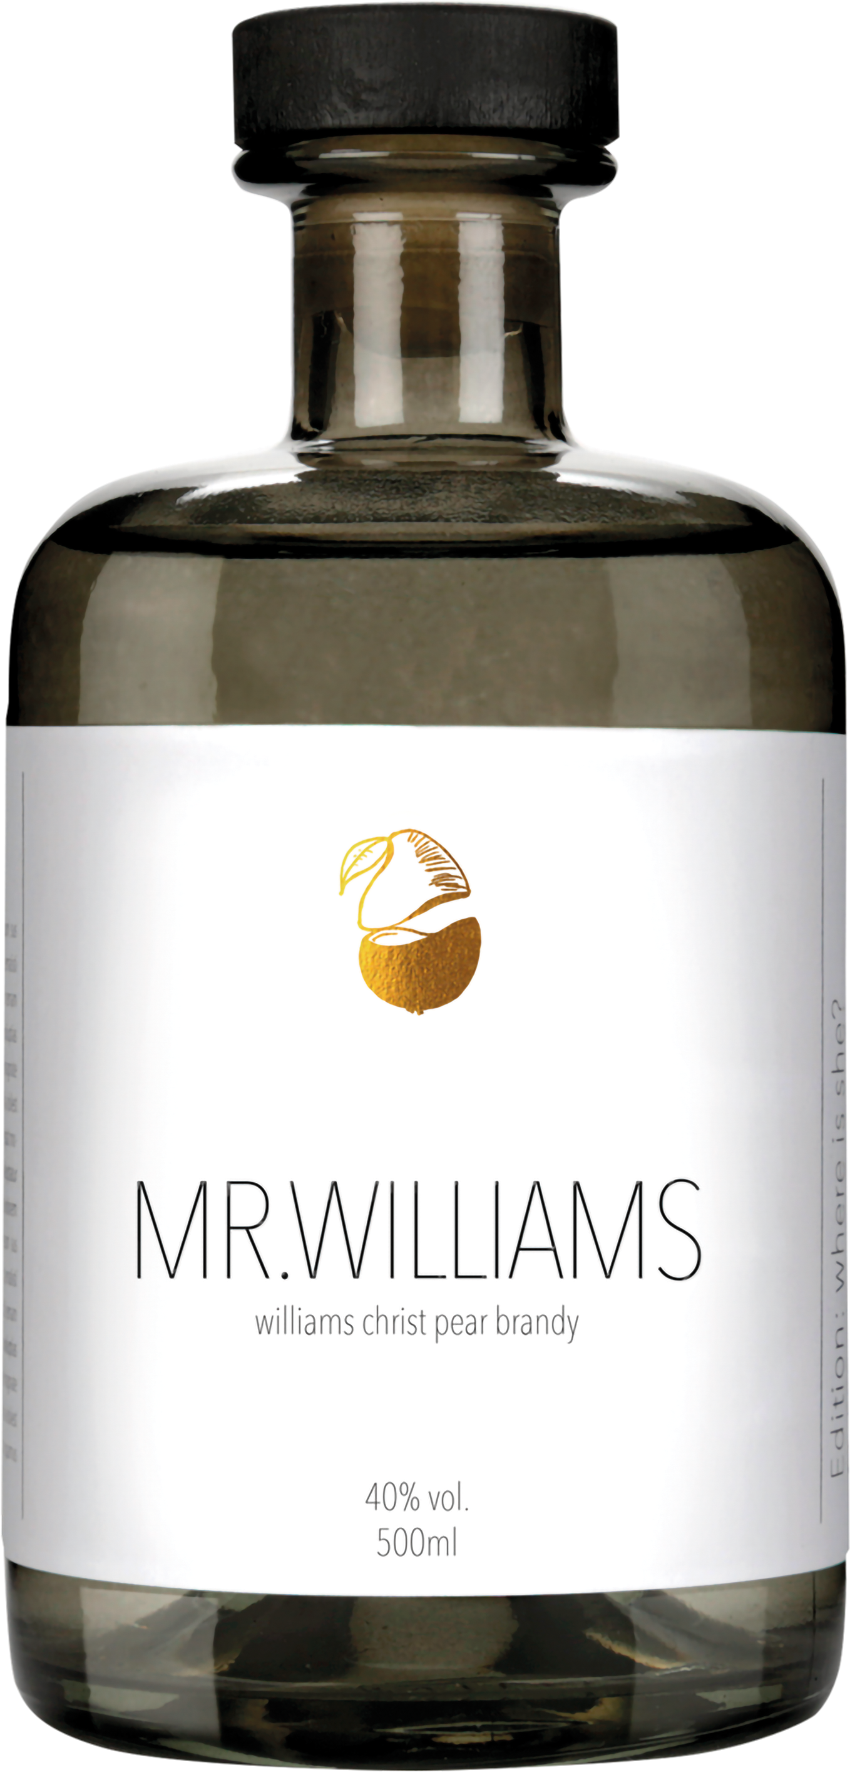 Mr. Williams finest williams christ pear brandy